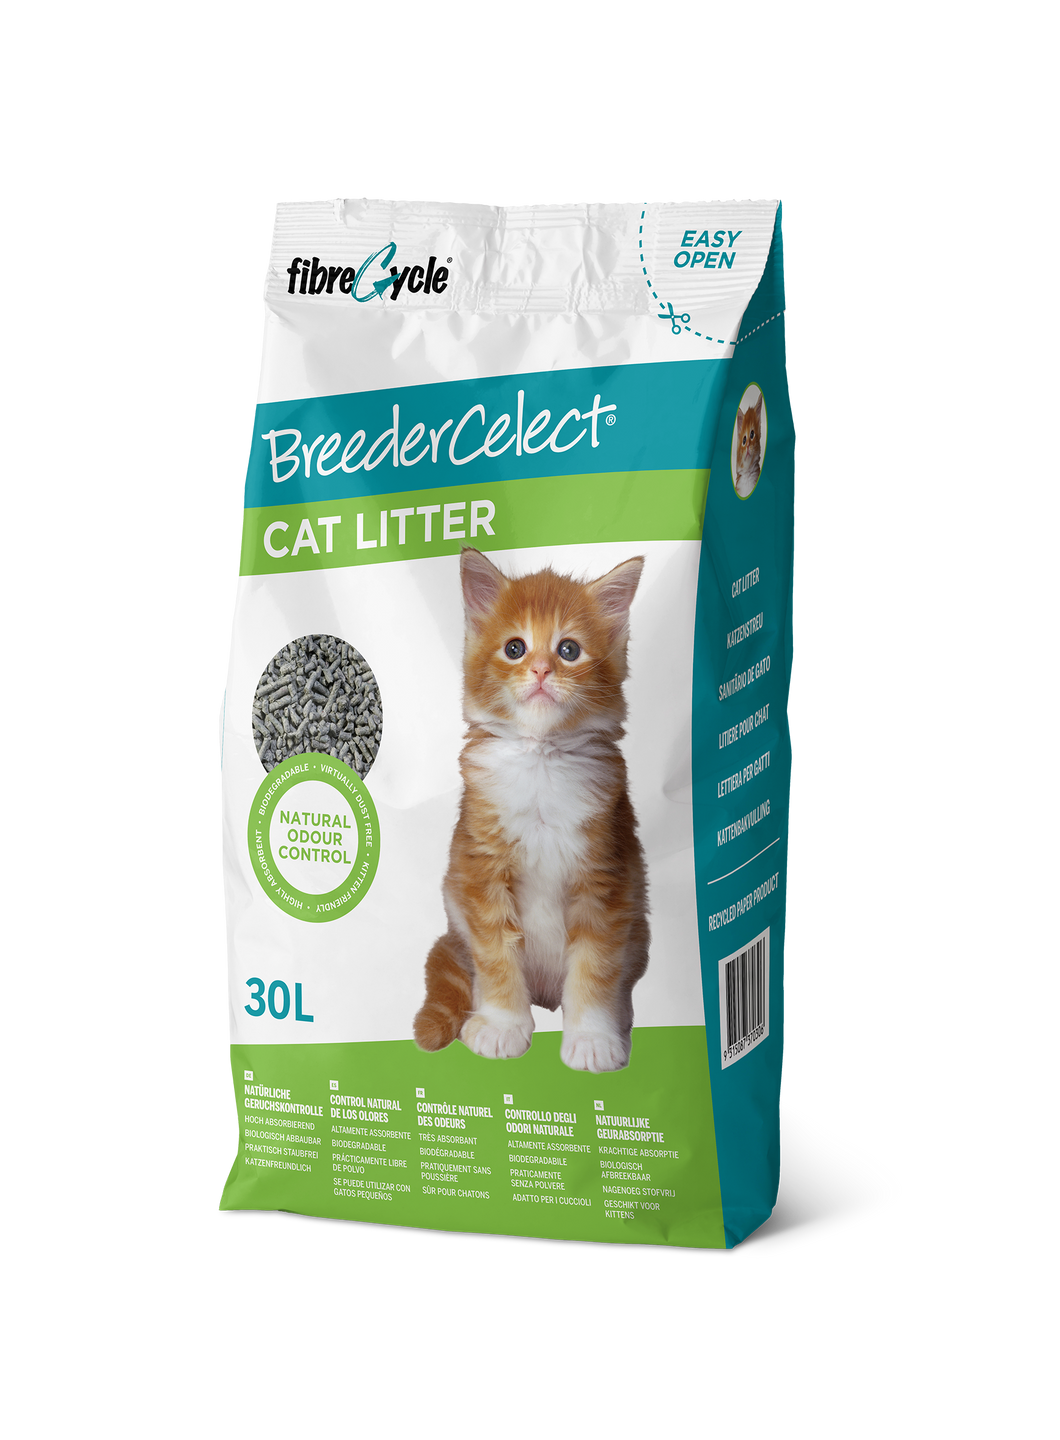 Breeder Celect Cat Litter (3 Sizes)